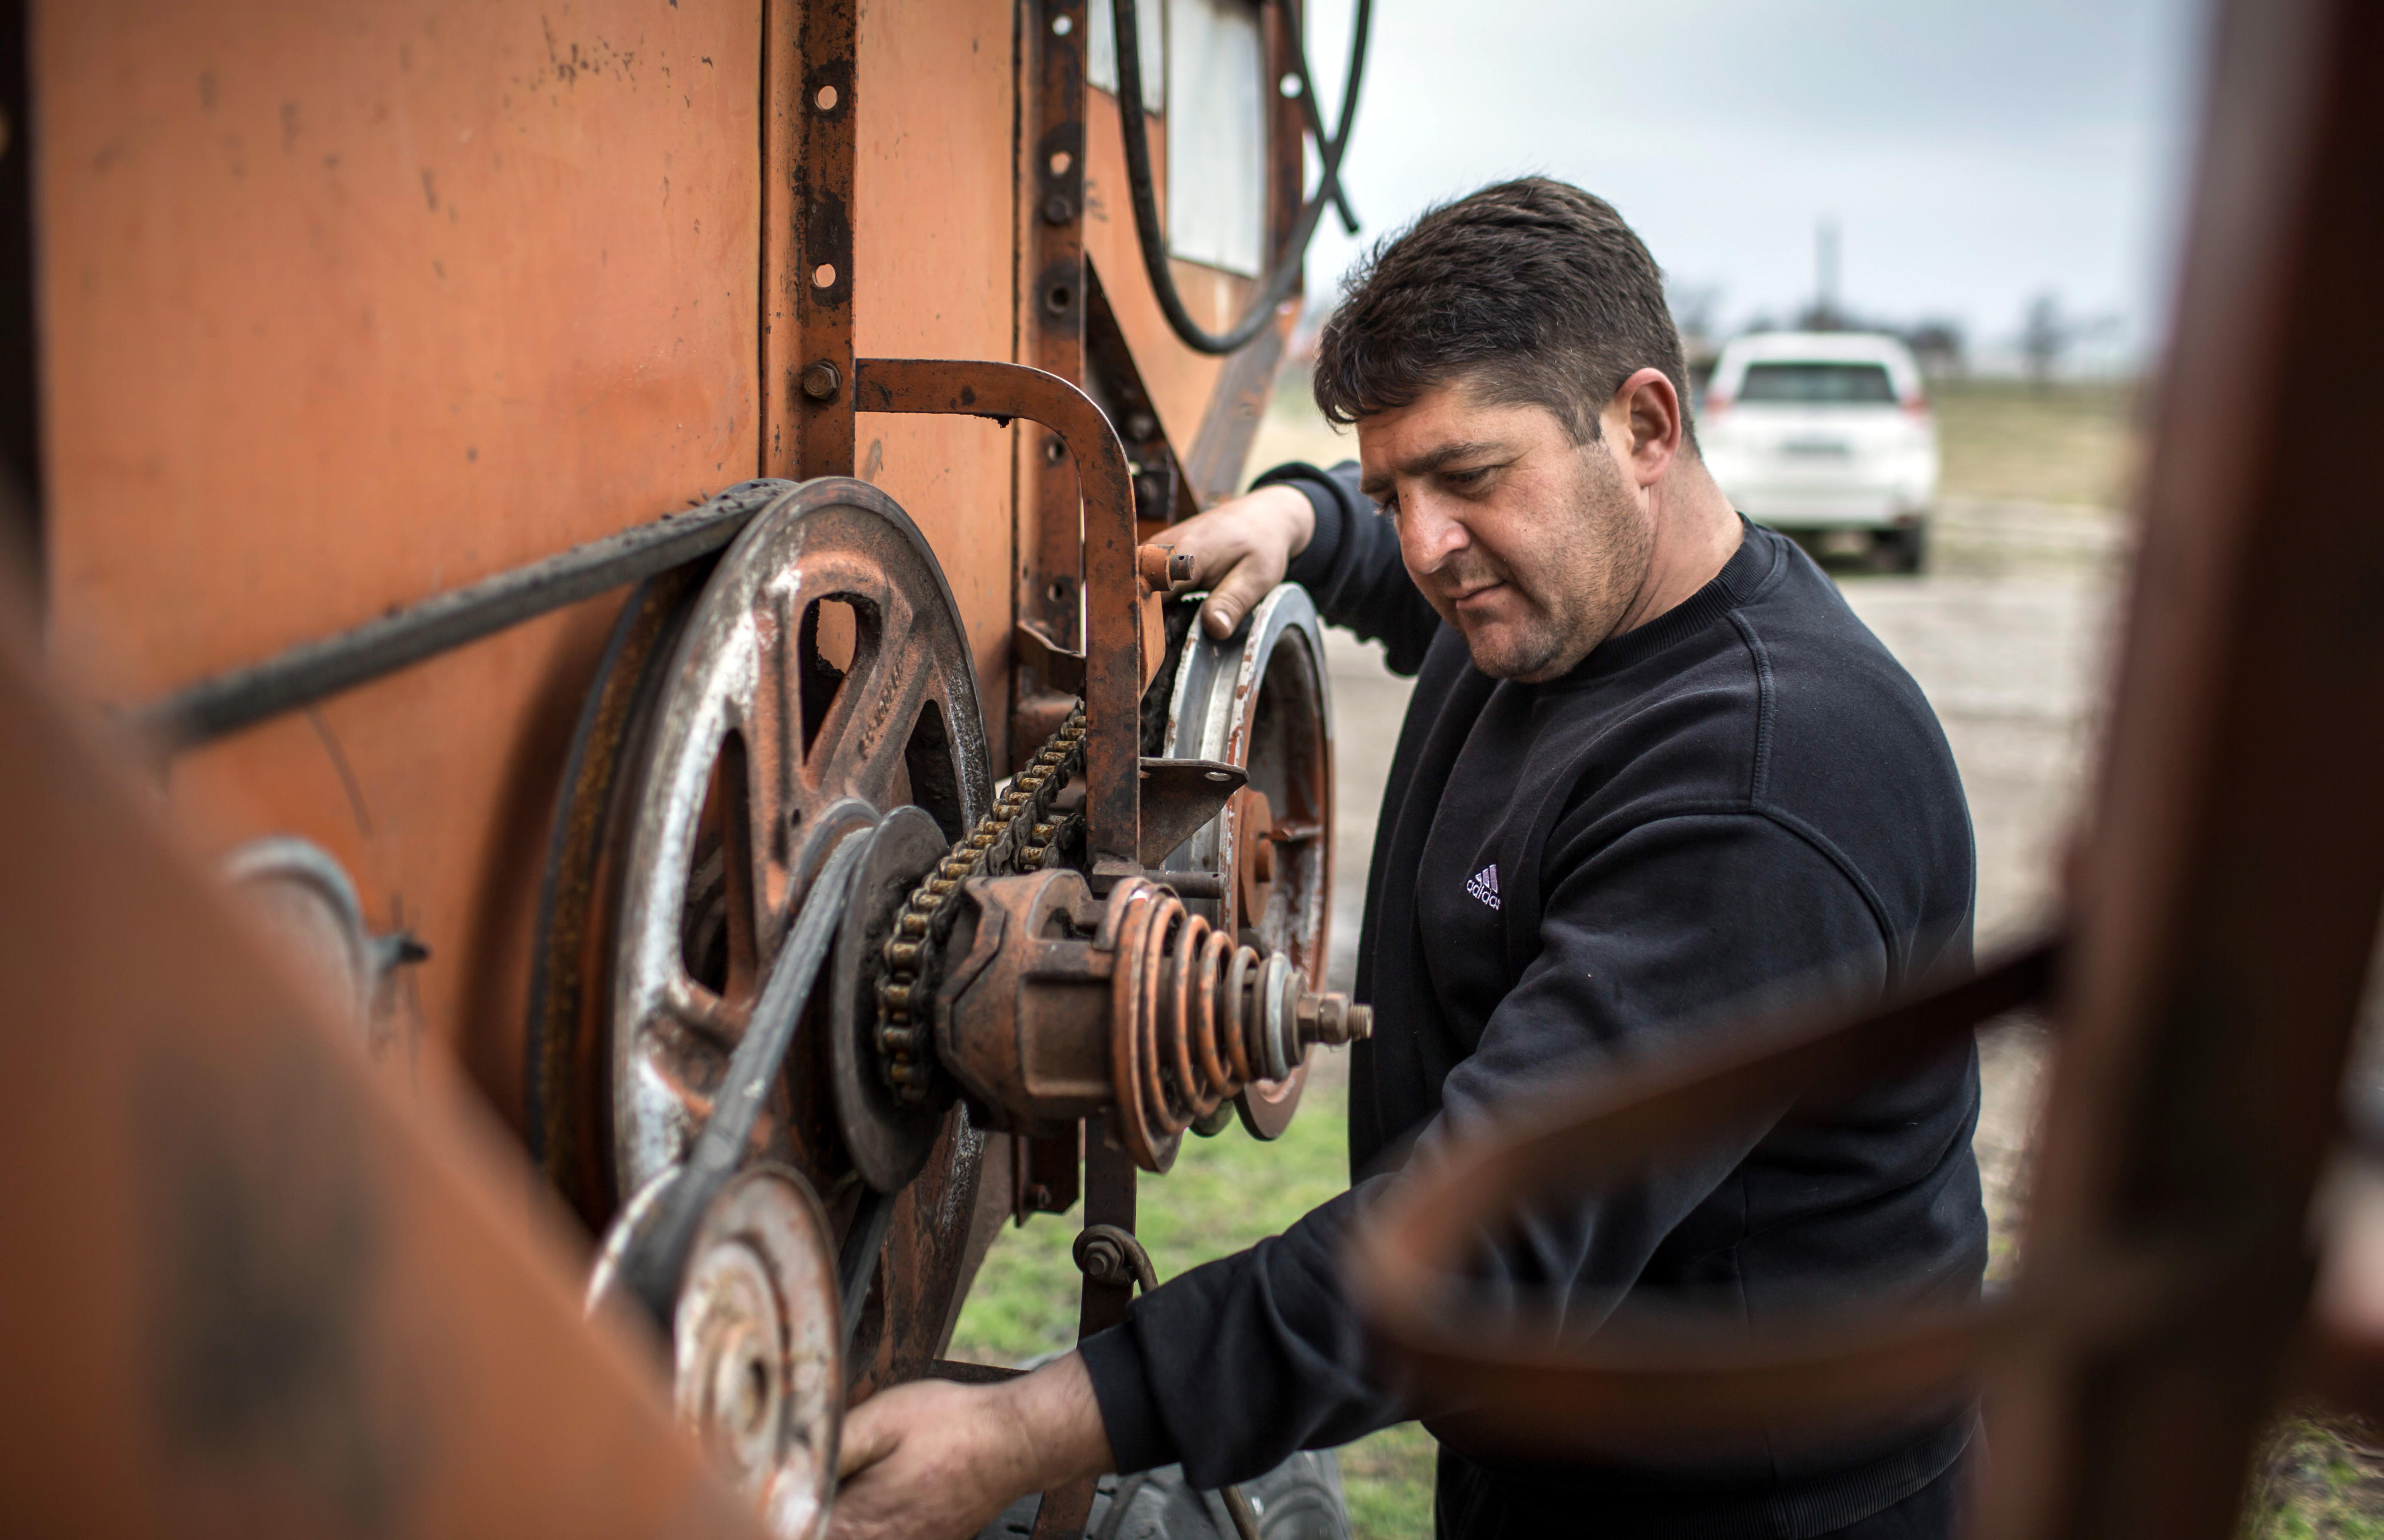 Georgia: A farmer repairing a combine harvester